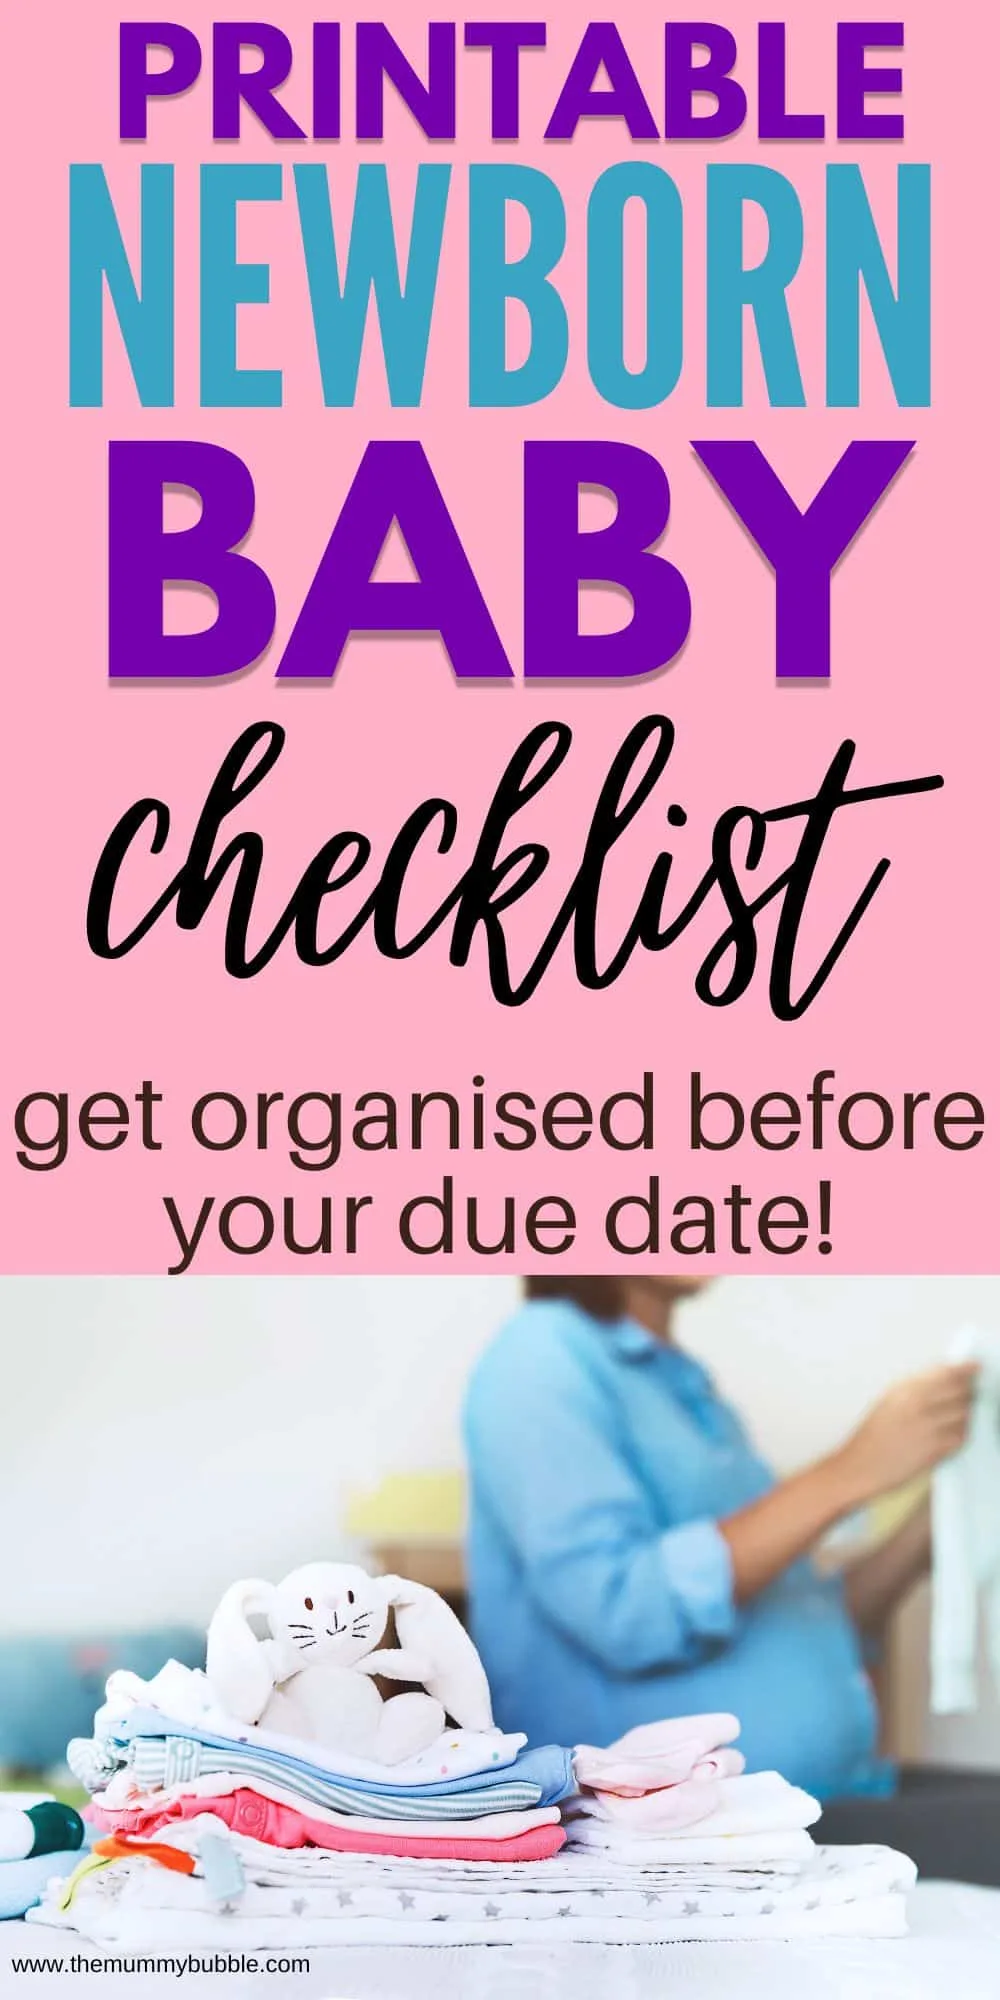 Printable newborn baby checklist 